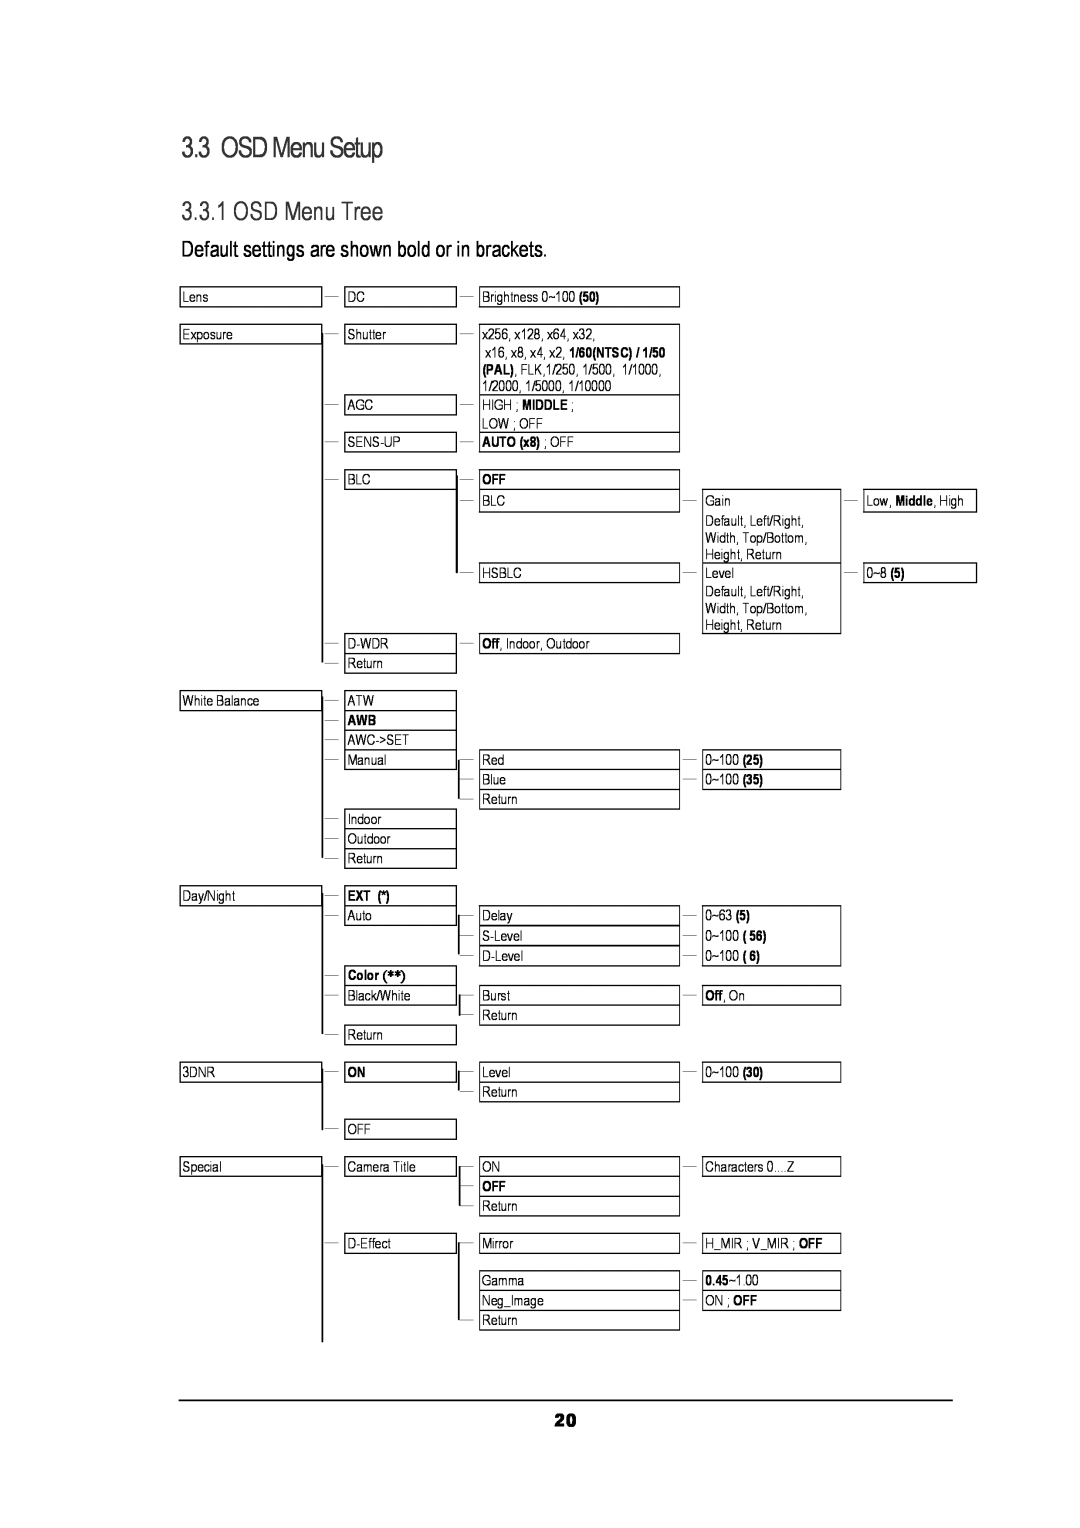 EverFocus EZ630 manual OSD Menu Setup, OSD Menu Tree 